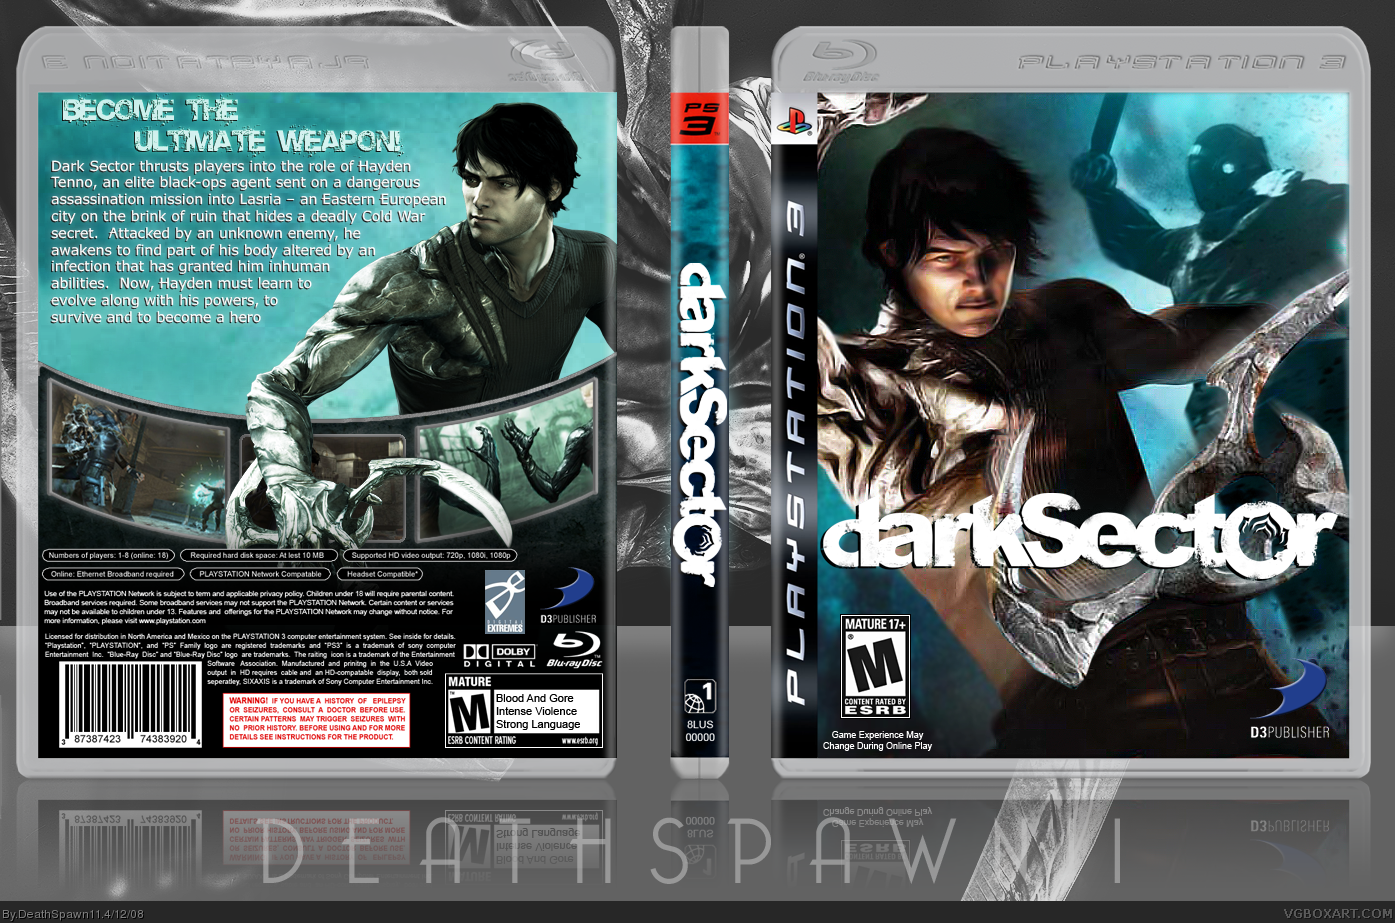 Dark Sector box cover